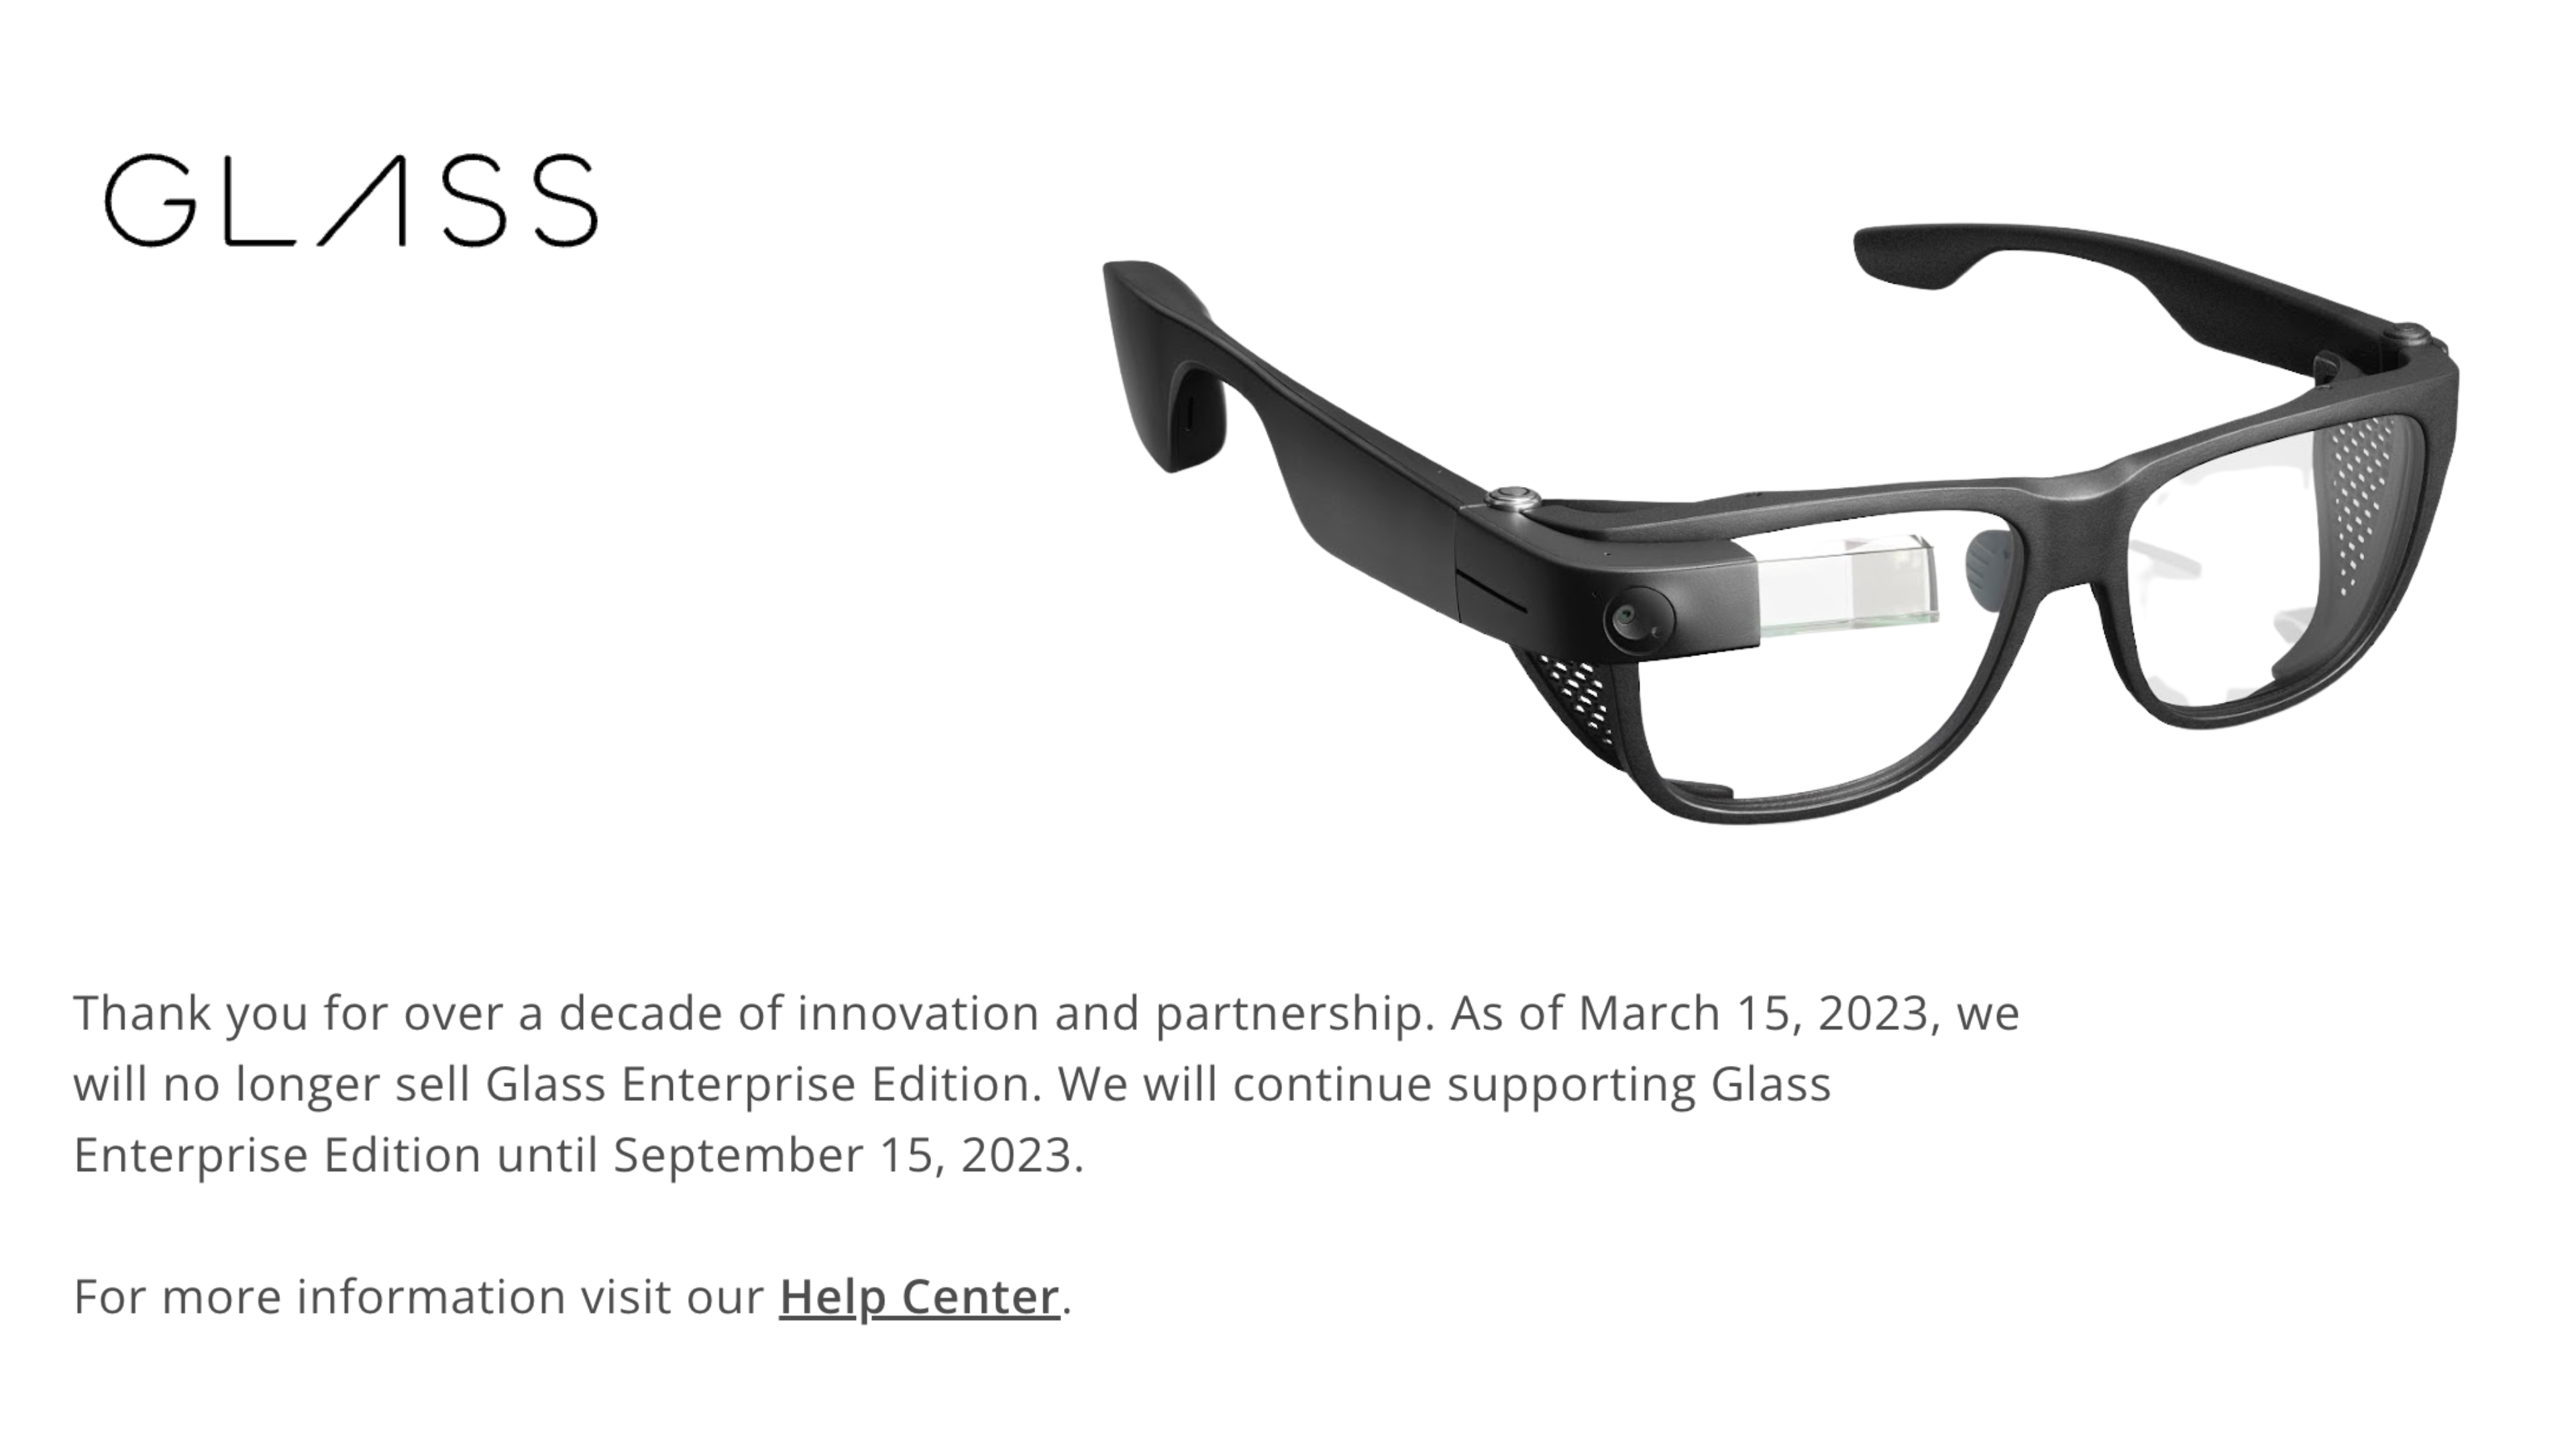 Google Glass Enterprise Edition farewell message